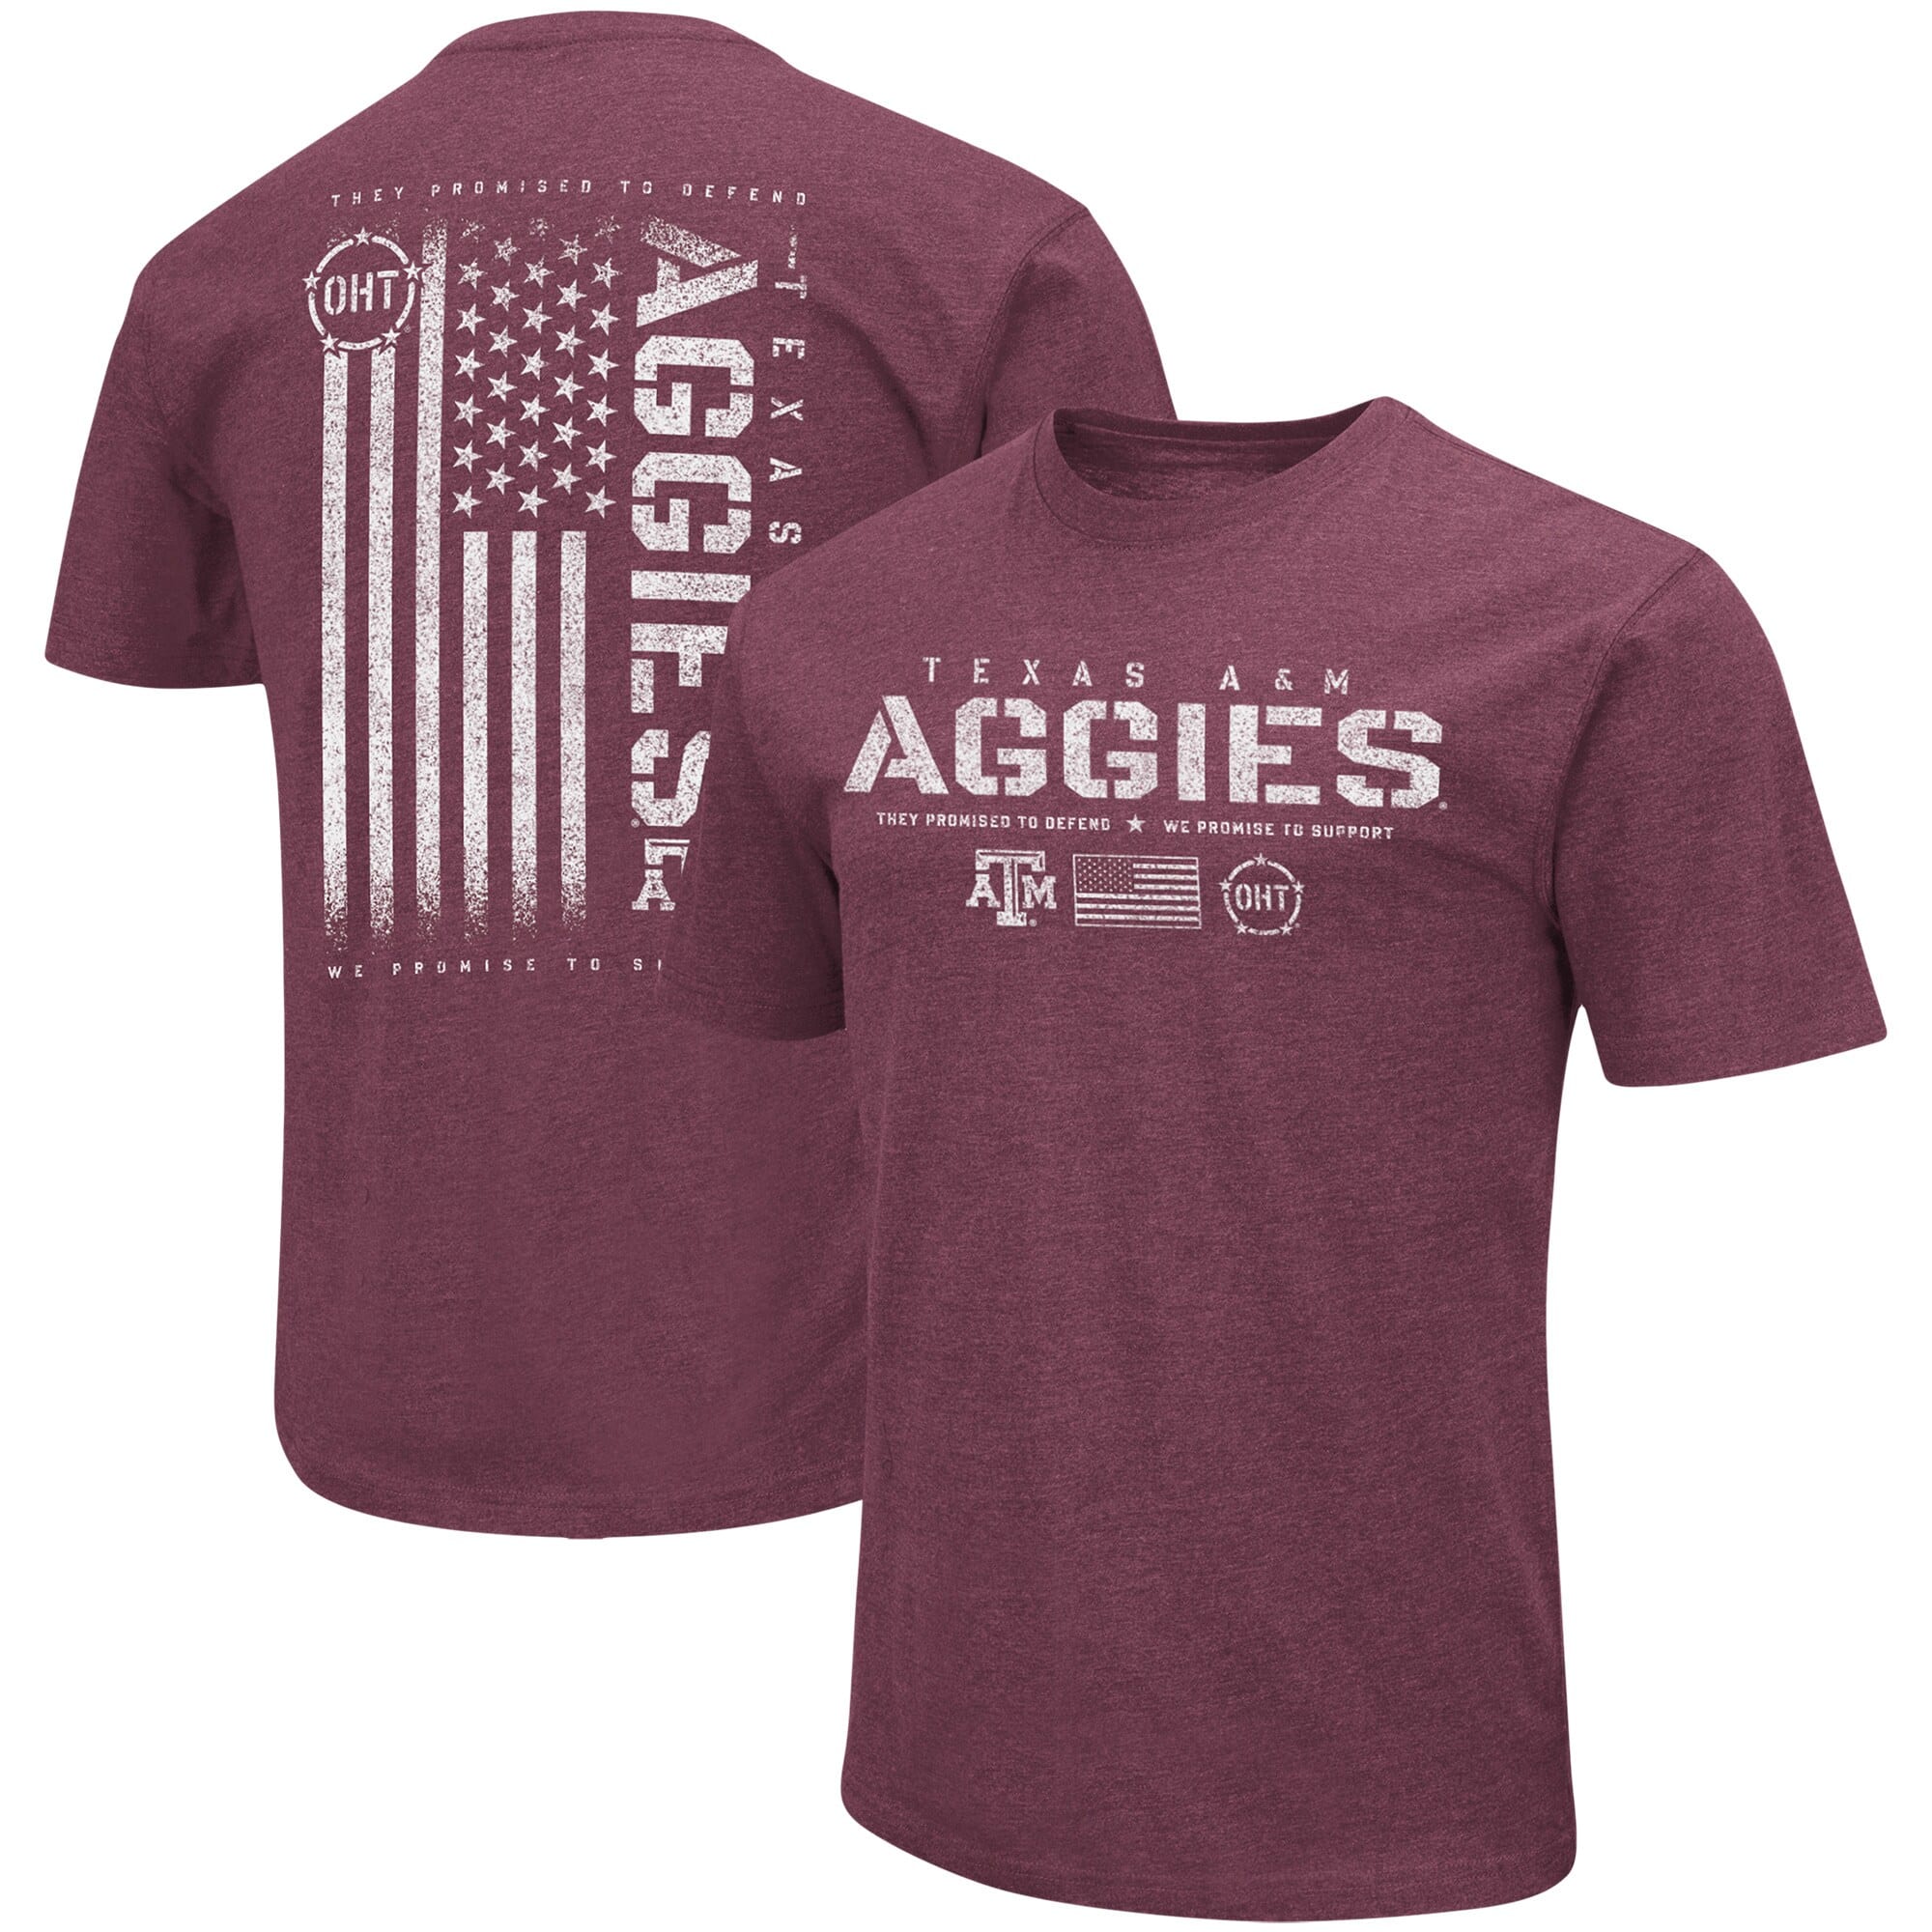 Premium Wrecking Crew Texas A&M Football Gig Em Aggies Shirt